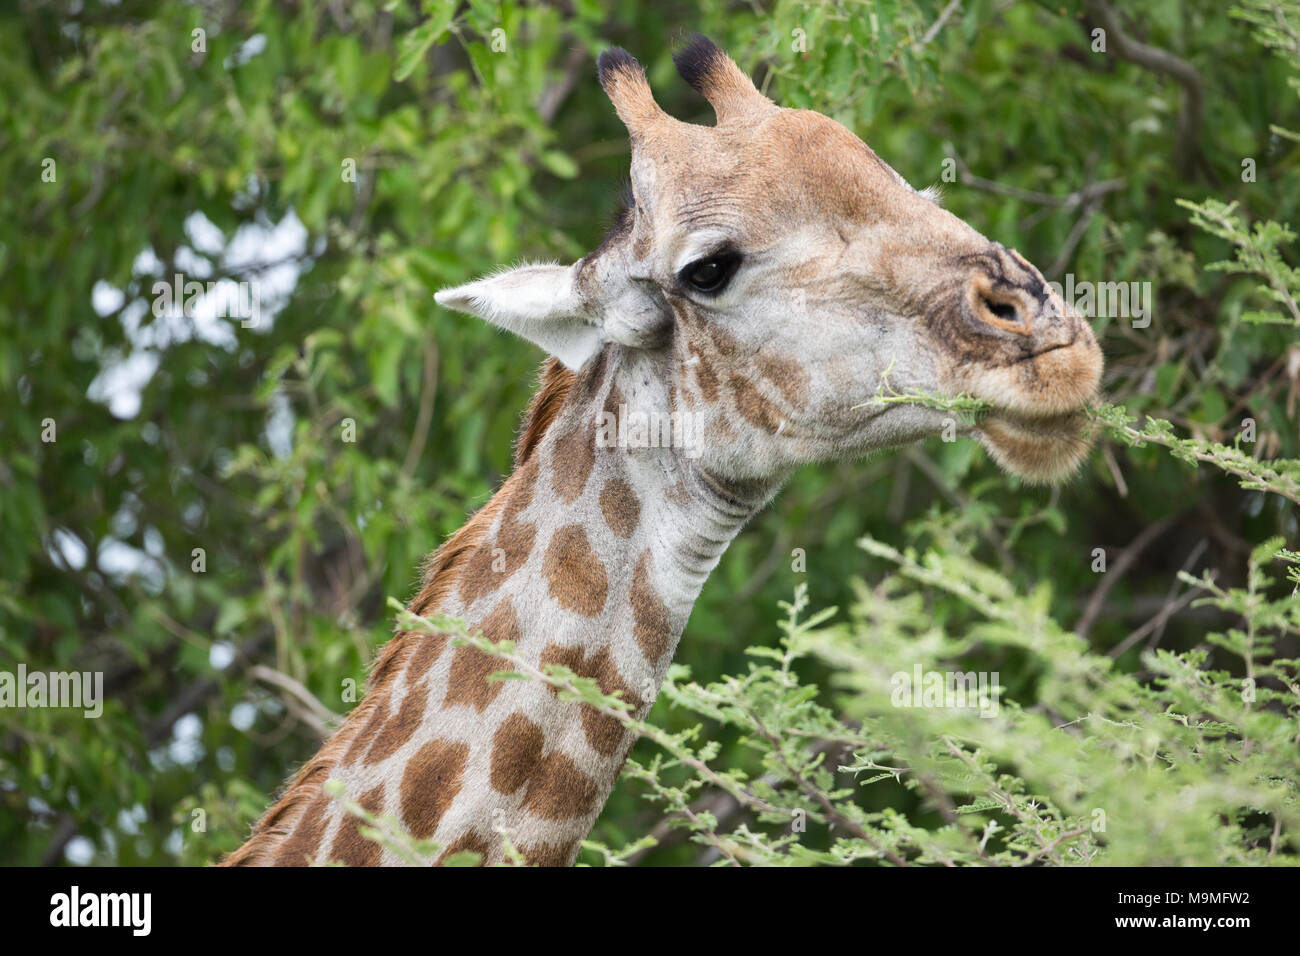 Giraffe (Giraffa camelopardalis), browsing prickly choice stems and leaves of Acacia Tree. Sensitive lips avoid the thorns. Botswana. Africa. Stock Photo